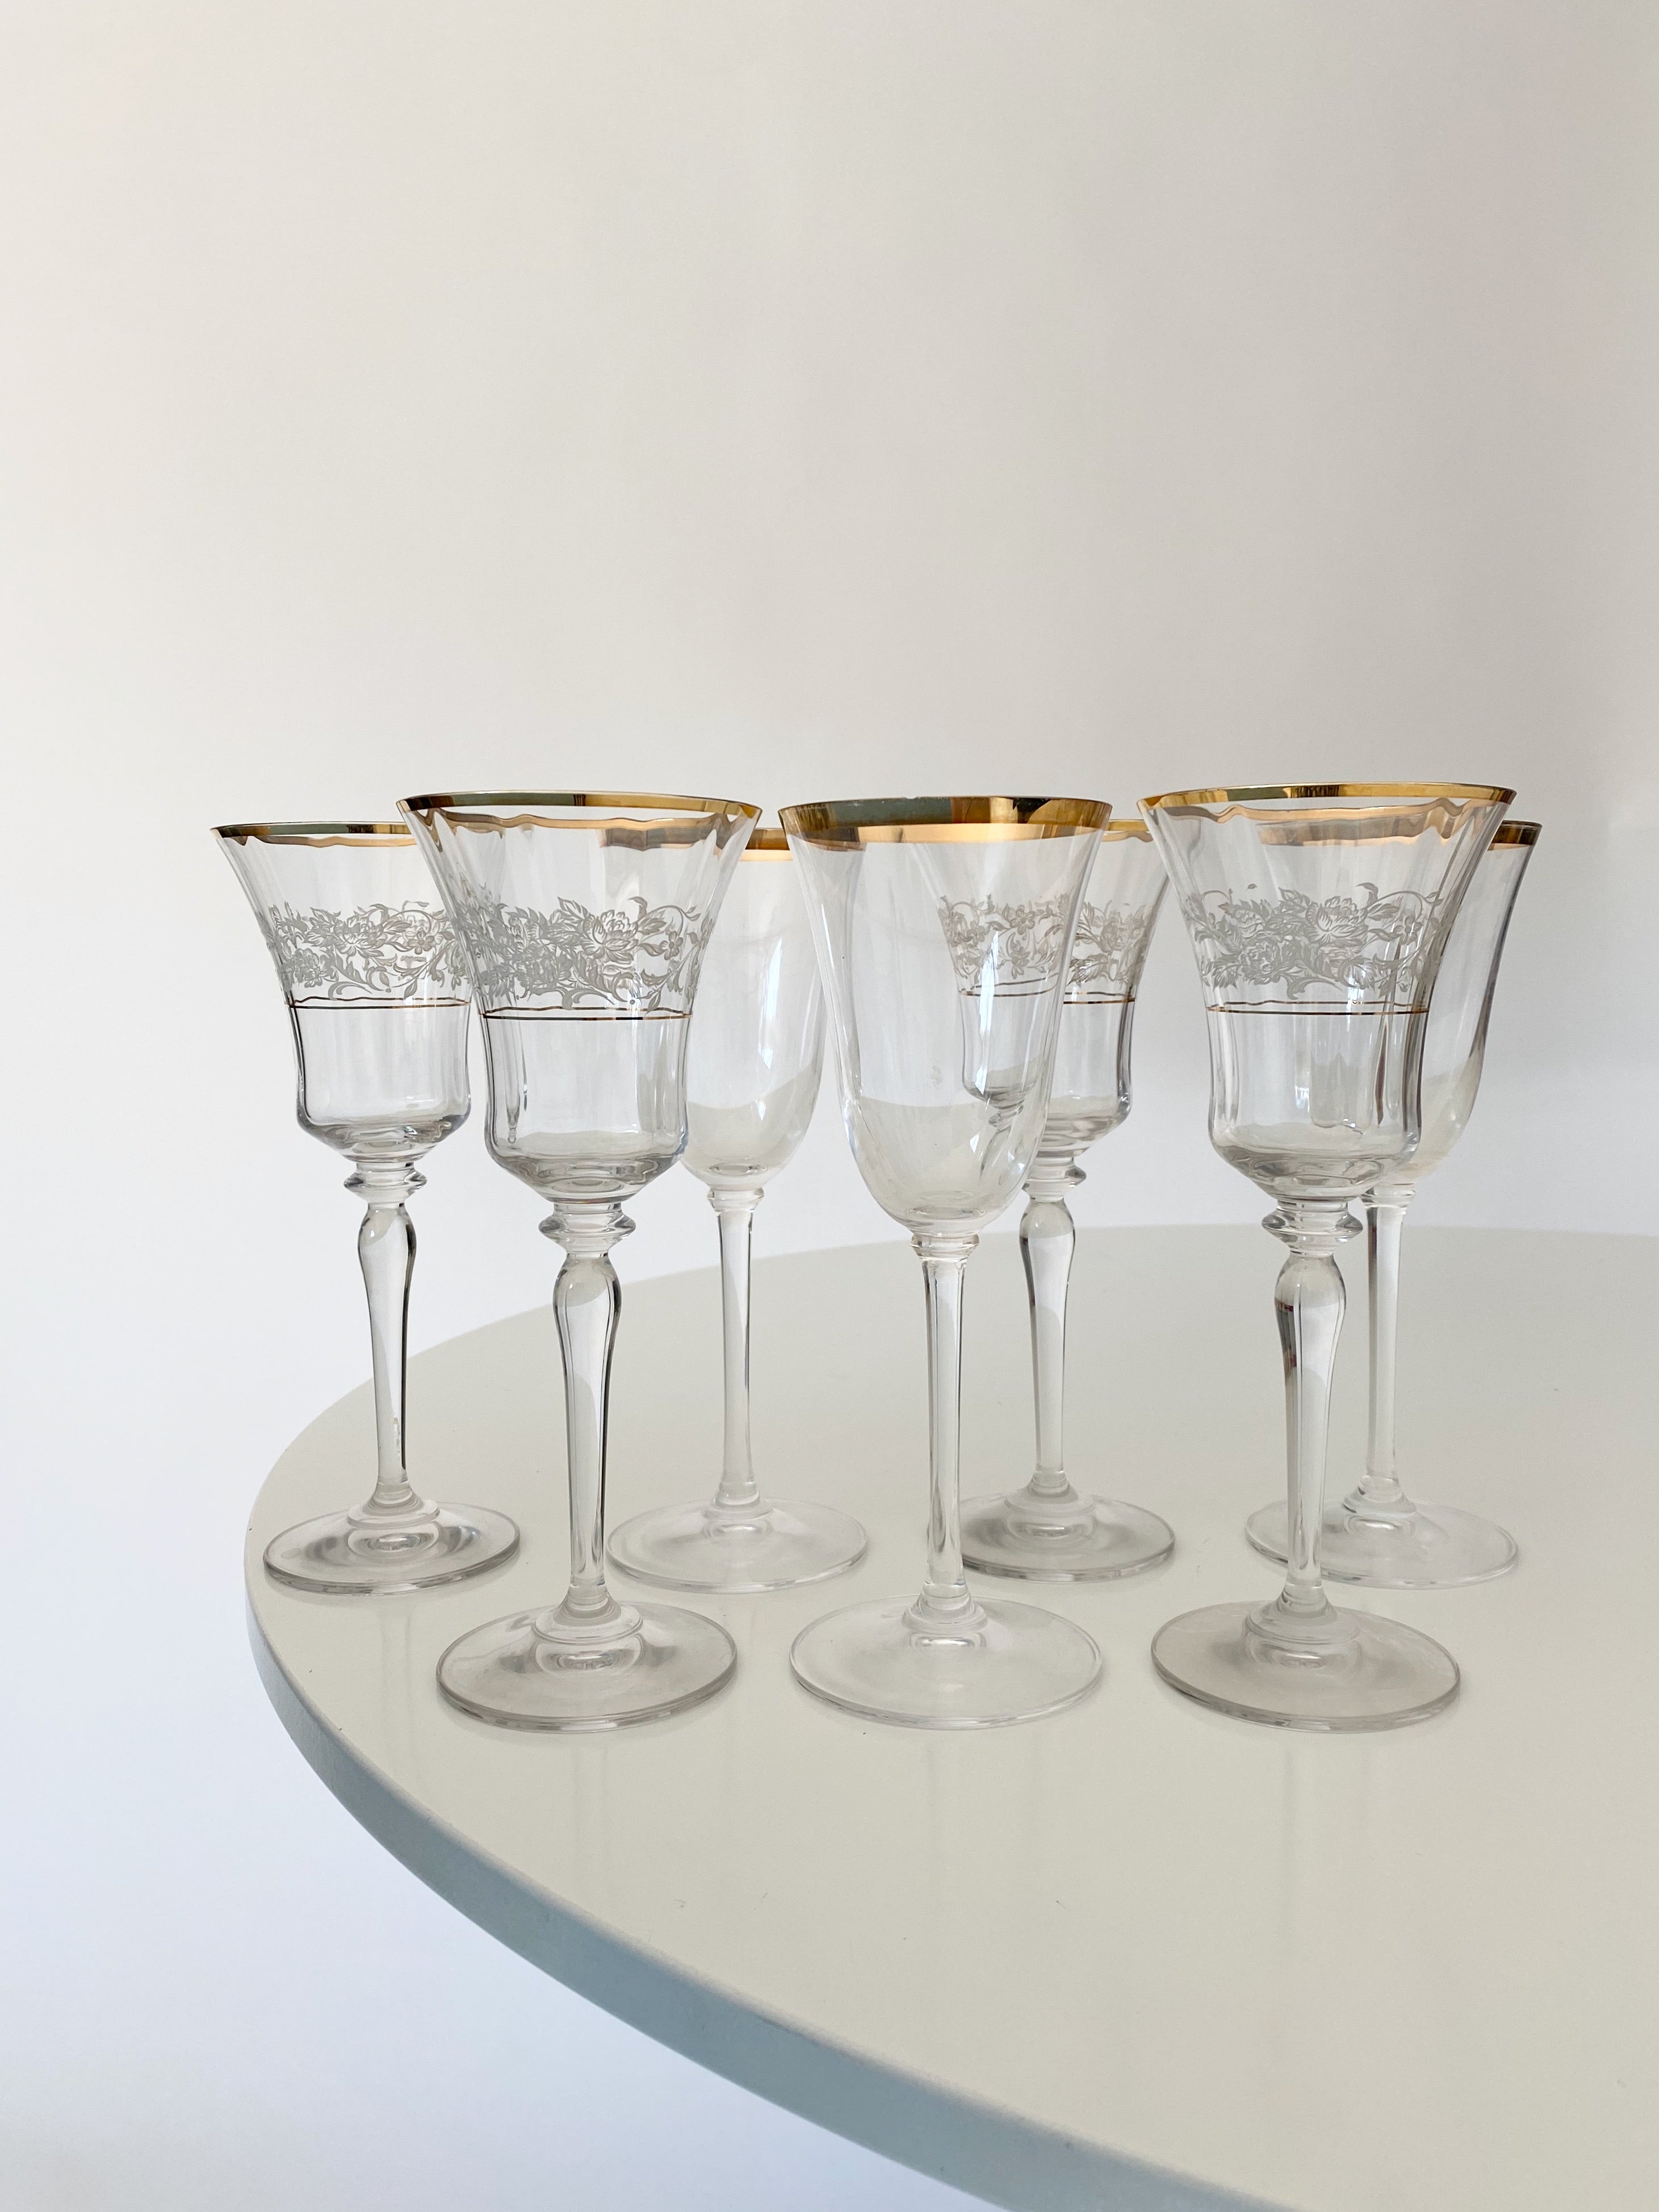 Vintage Gold Rim Wine Glasses